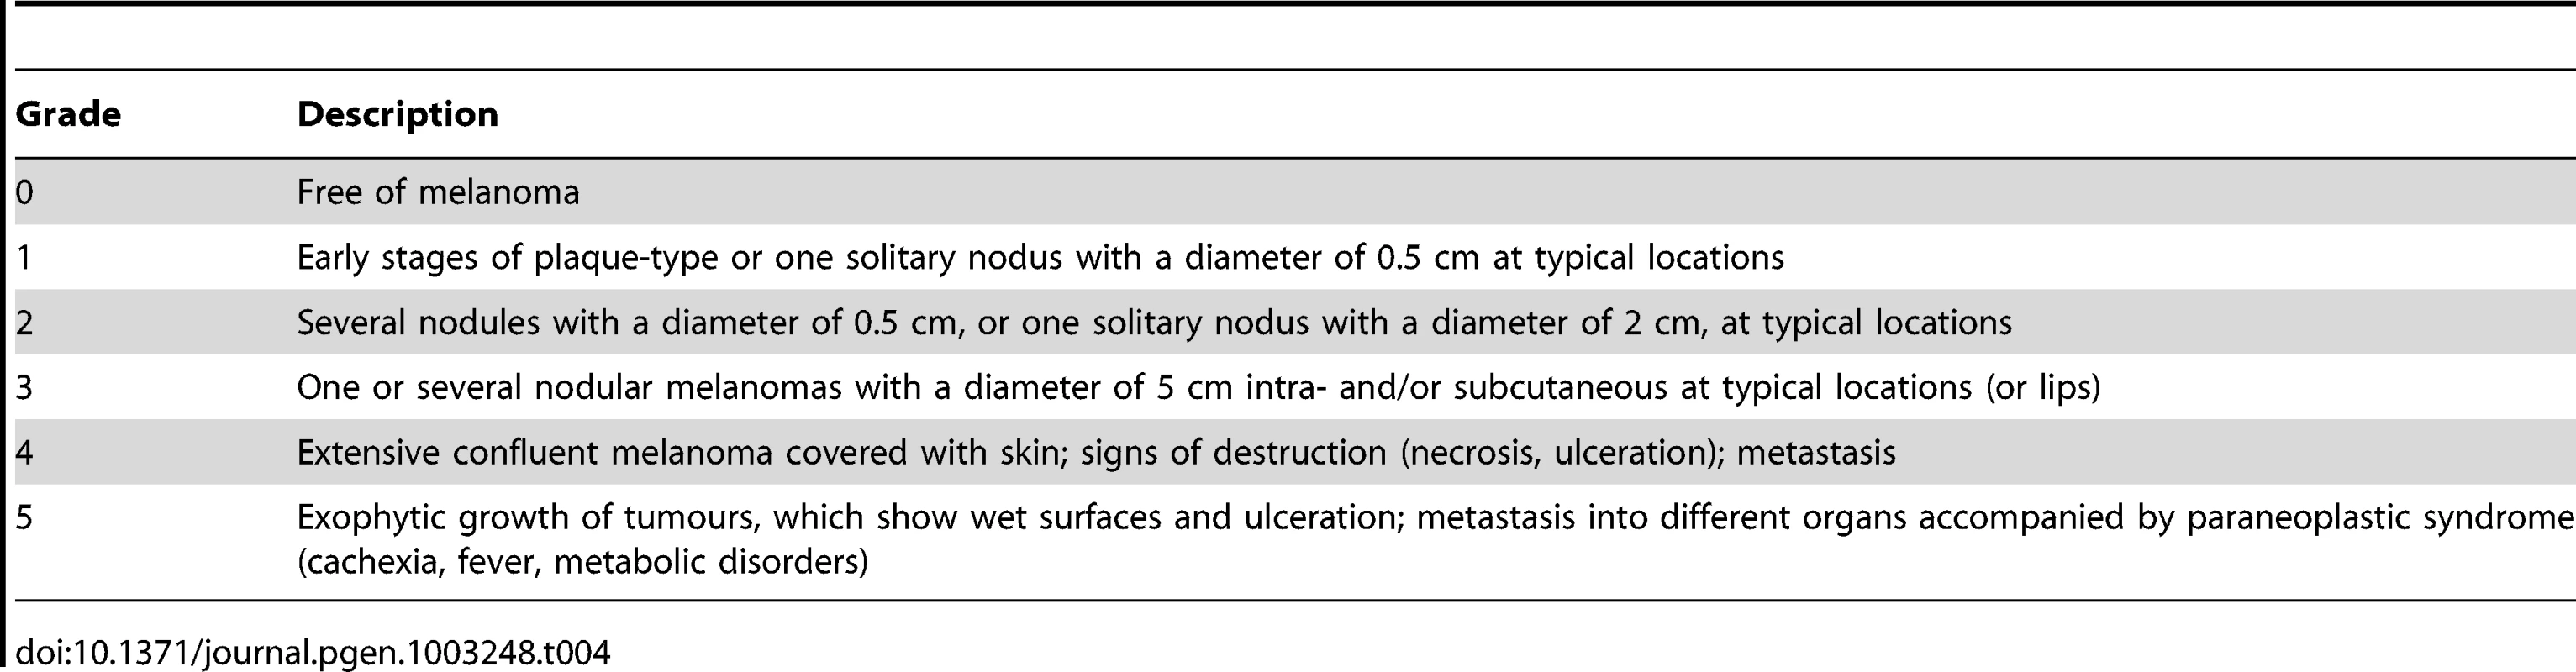 Clinical classification of melanoma grade in grey Lipizzan horses.